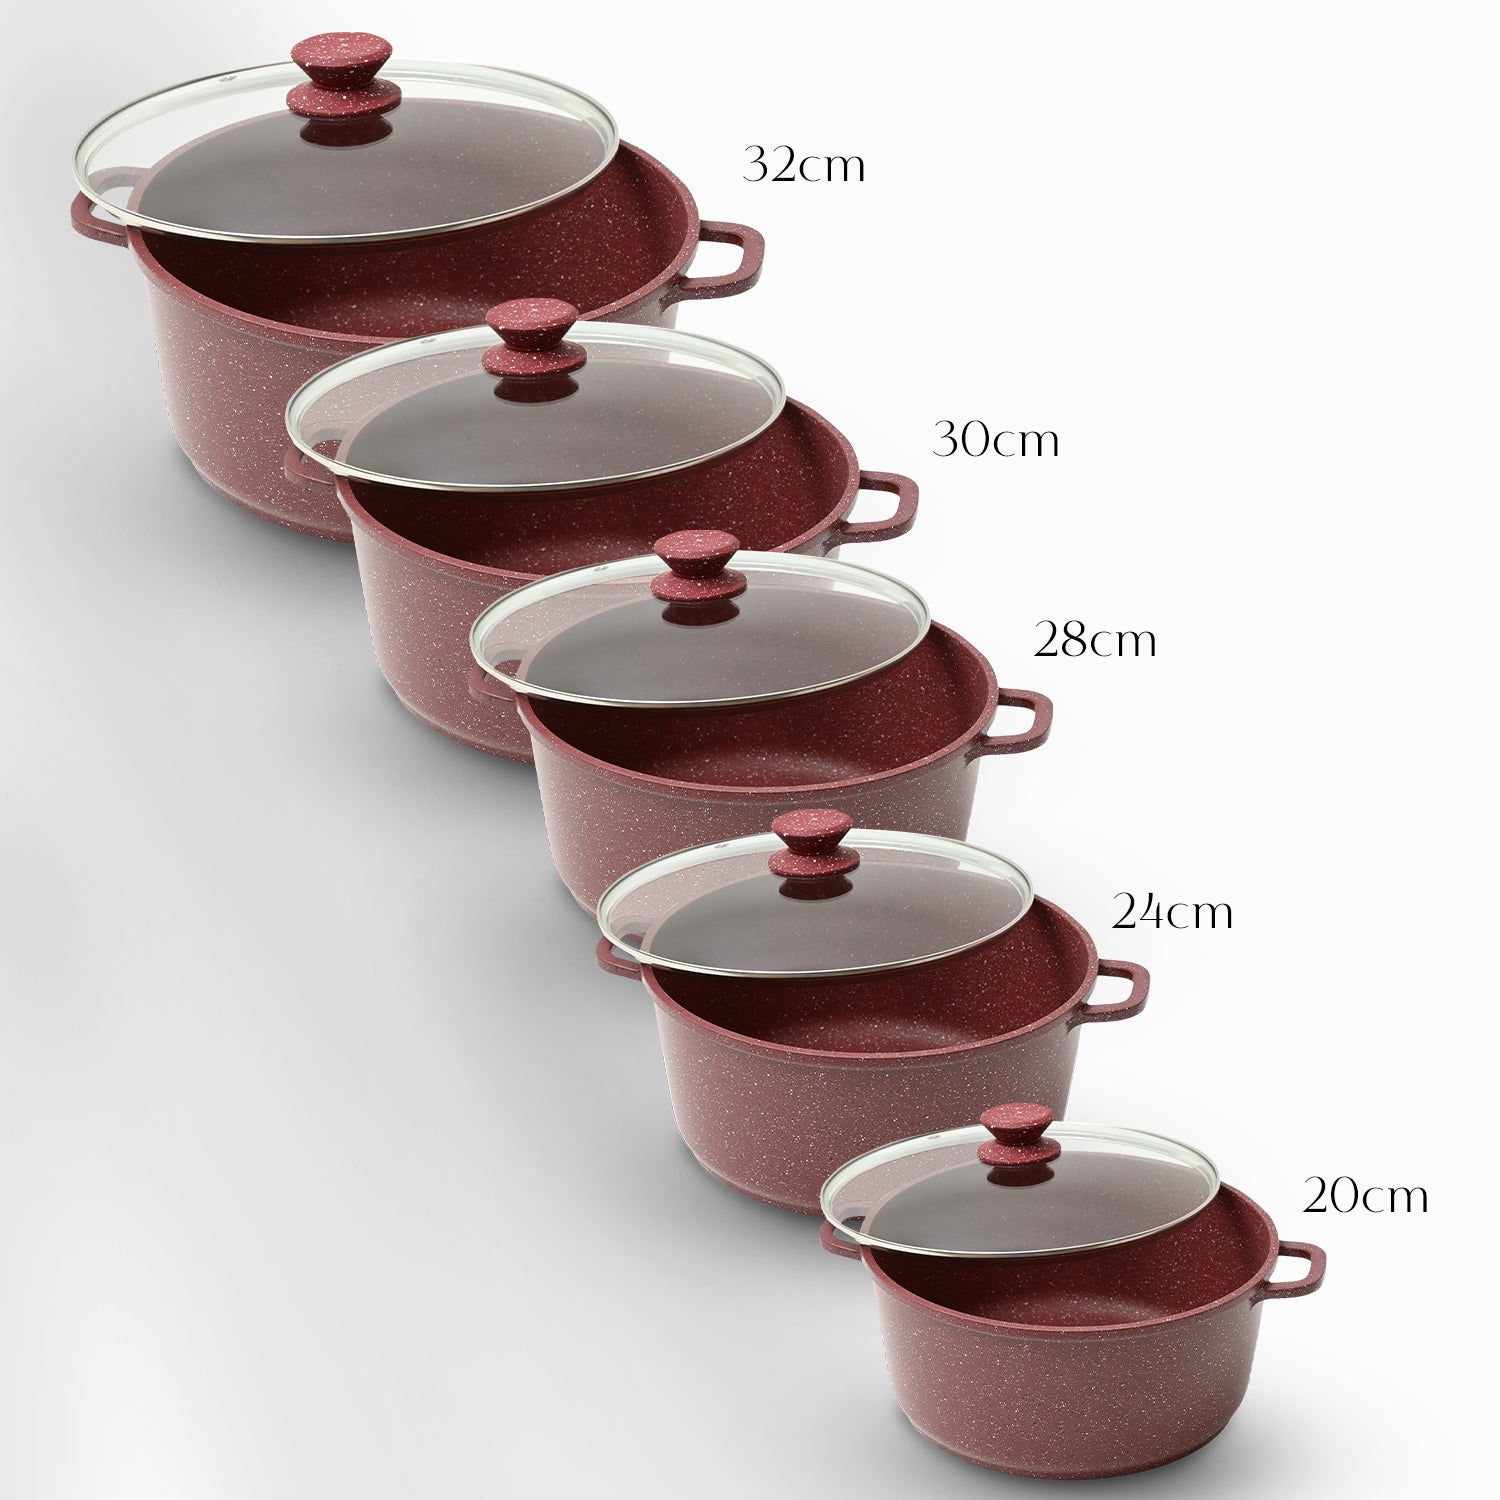 5-Piece Red Die-Cast Aluminium Cookware Set